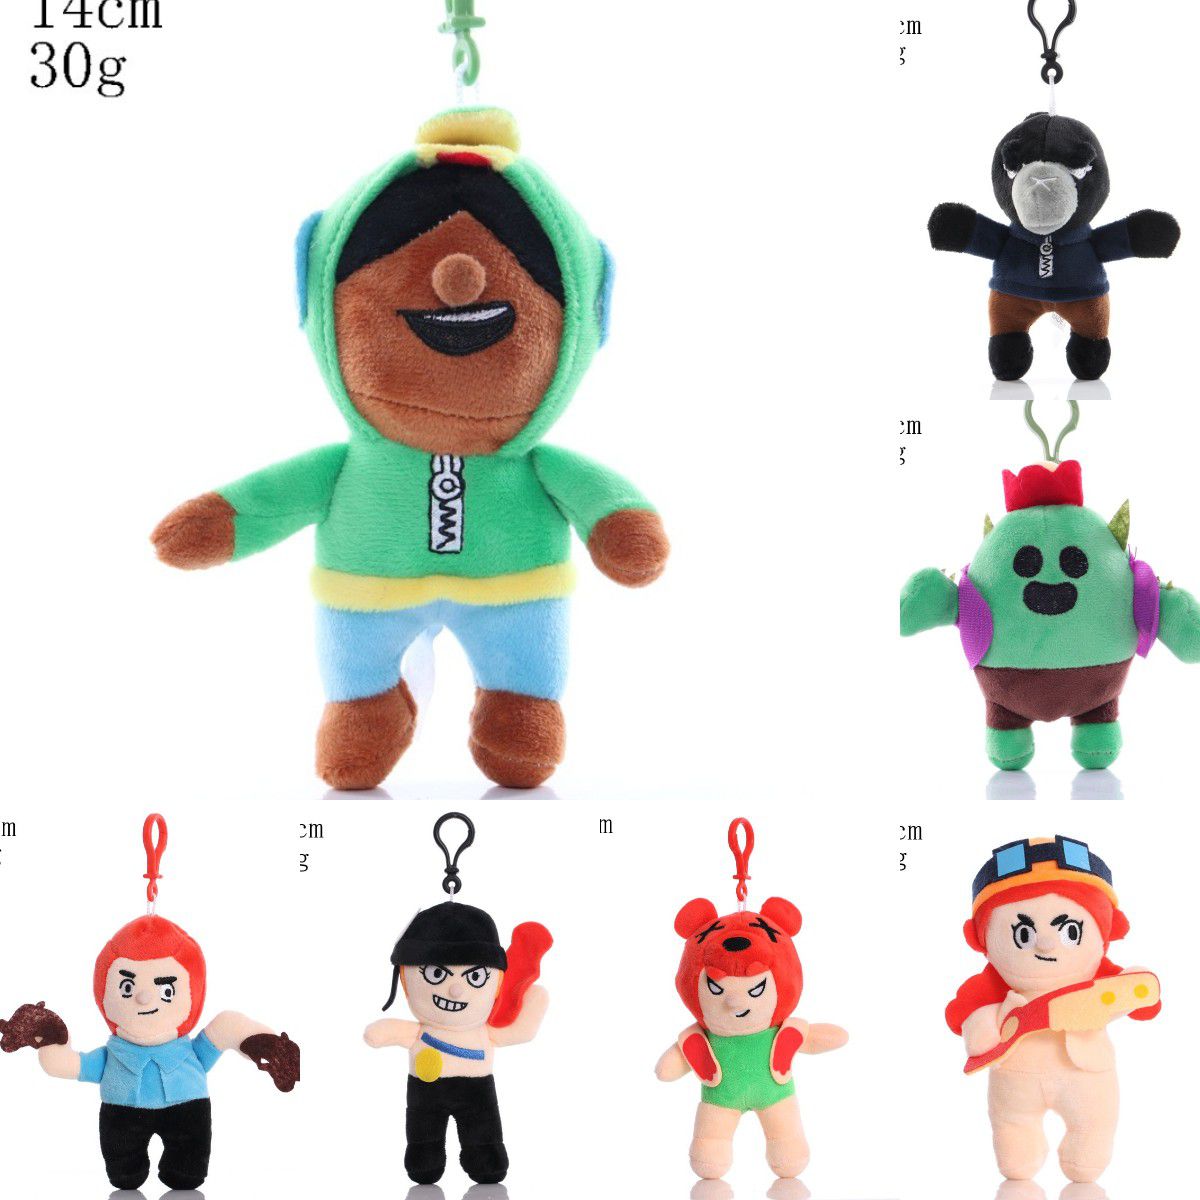 Buy Phuastore Game Cartoon Brawl Stars Plush Toy Stuffed Doll